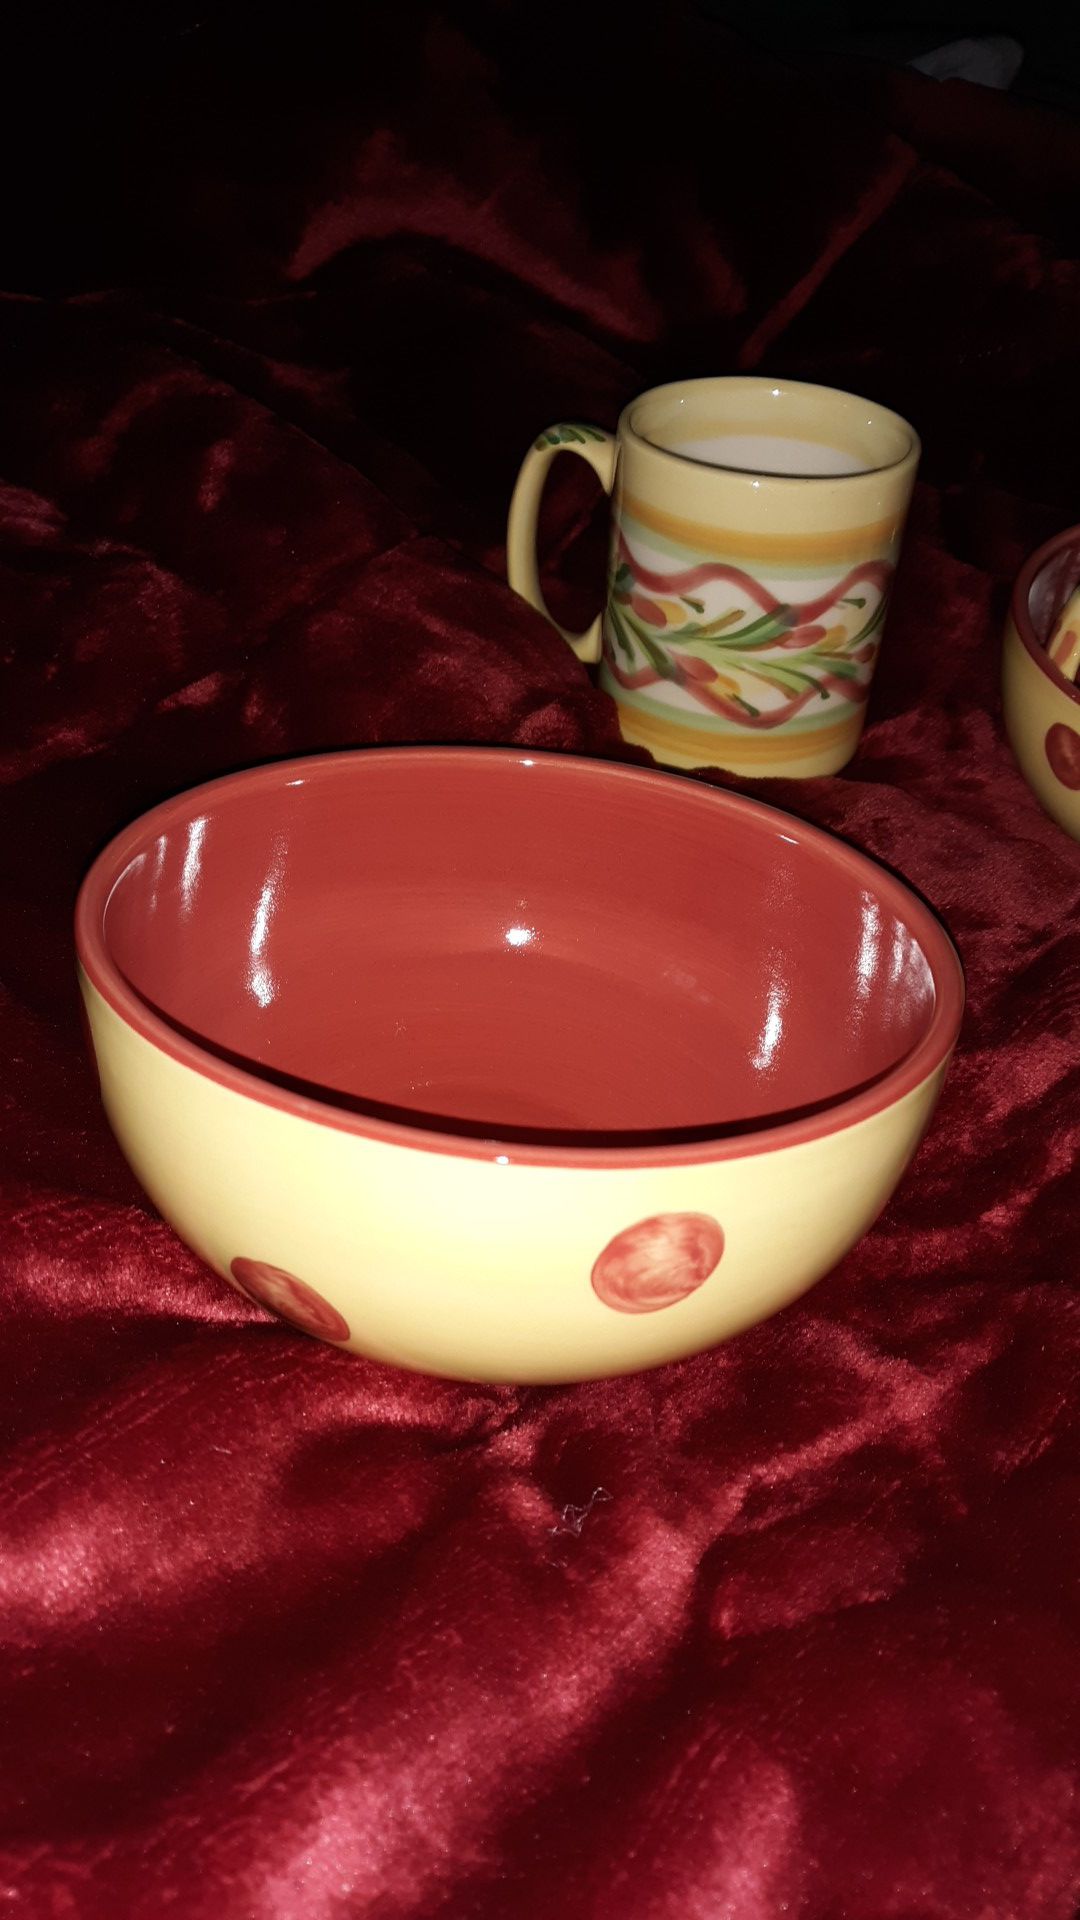 Coffee and bowl set